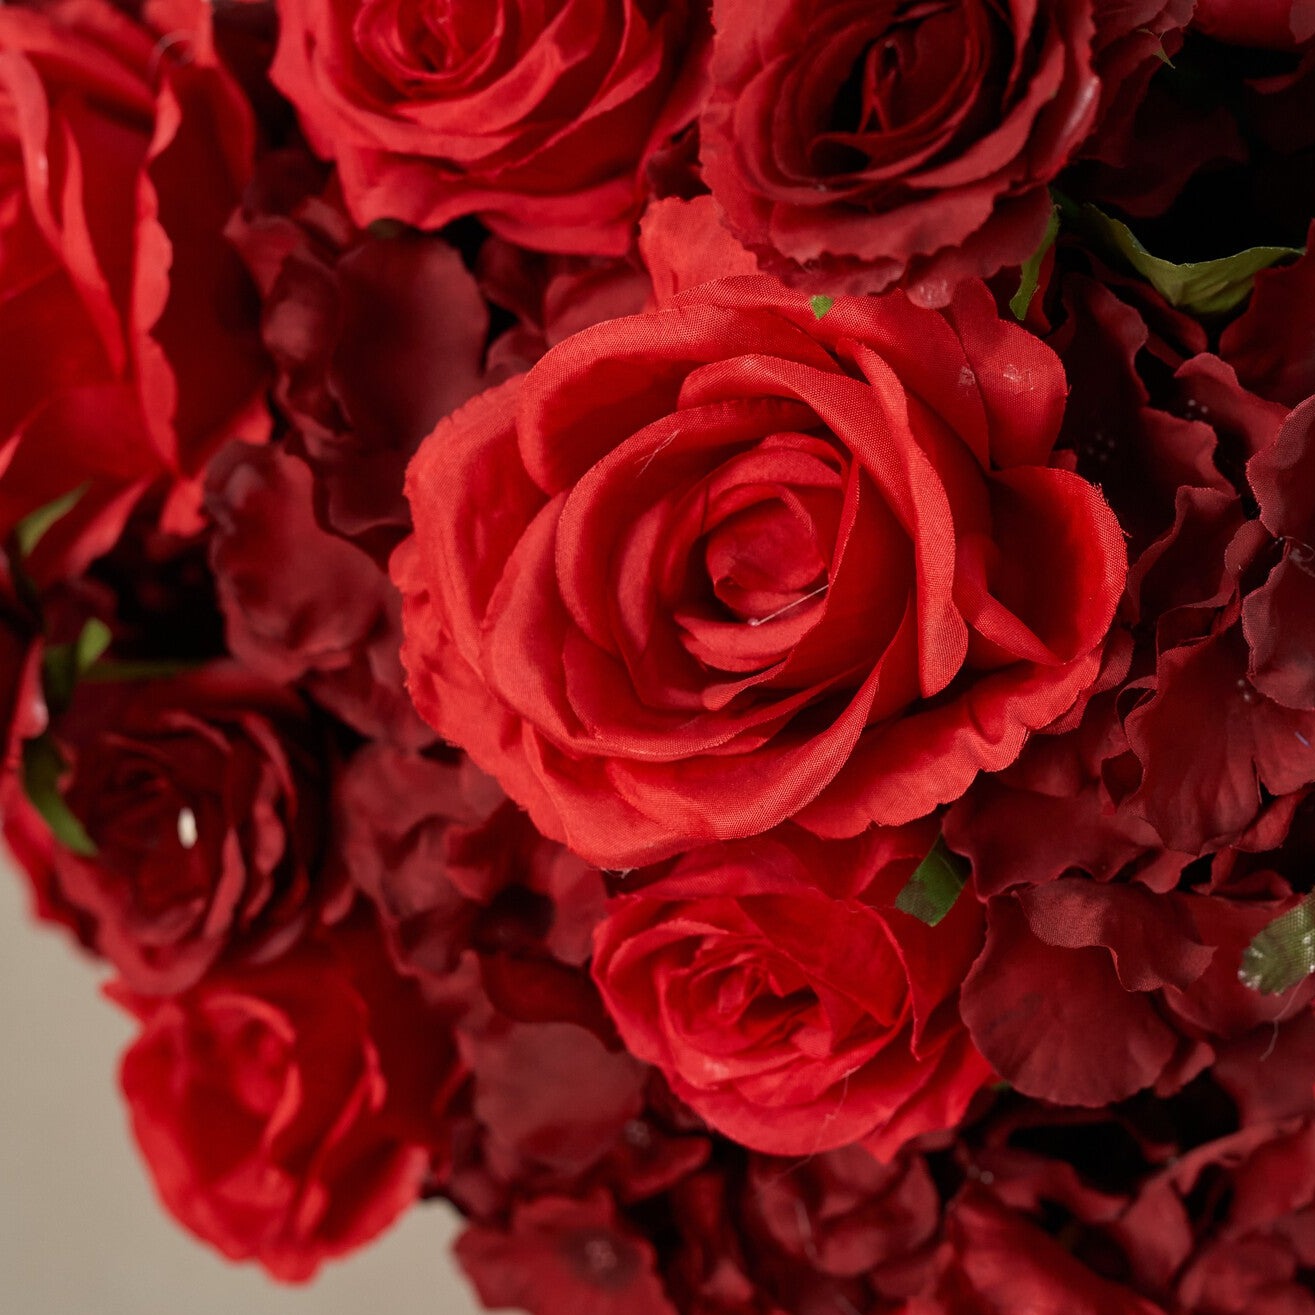 Flower Ball Dark Red Rose Wedding Proposal Party Centerpieces Decor